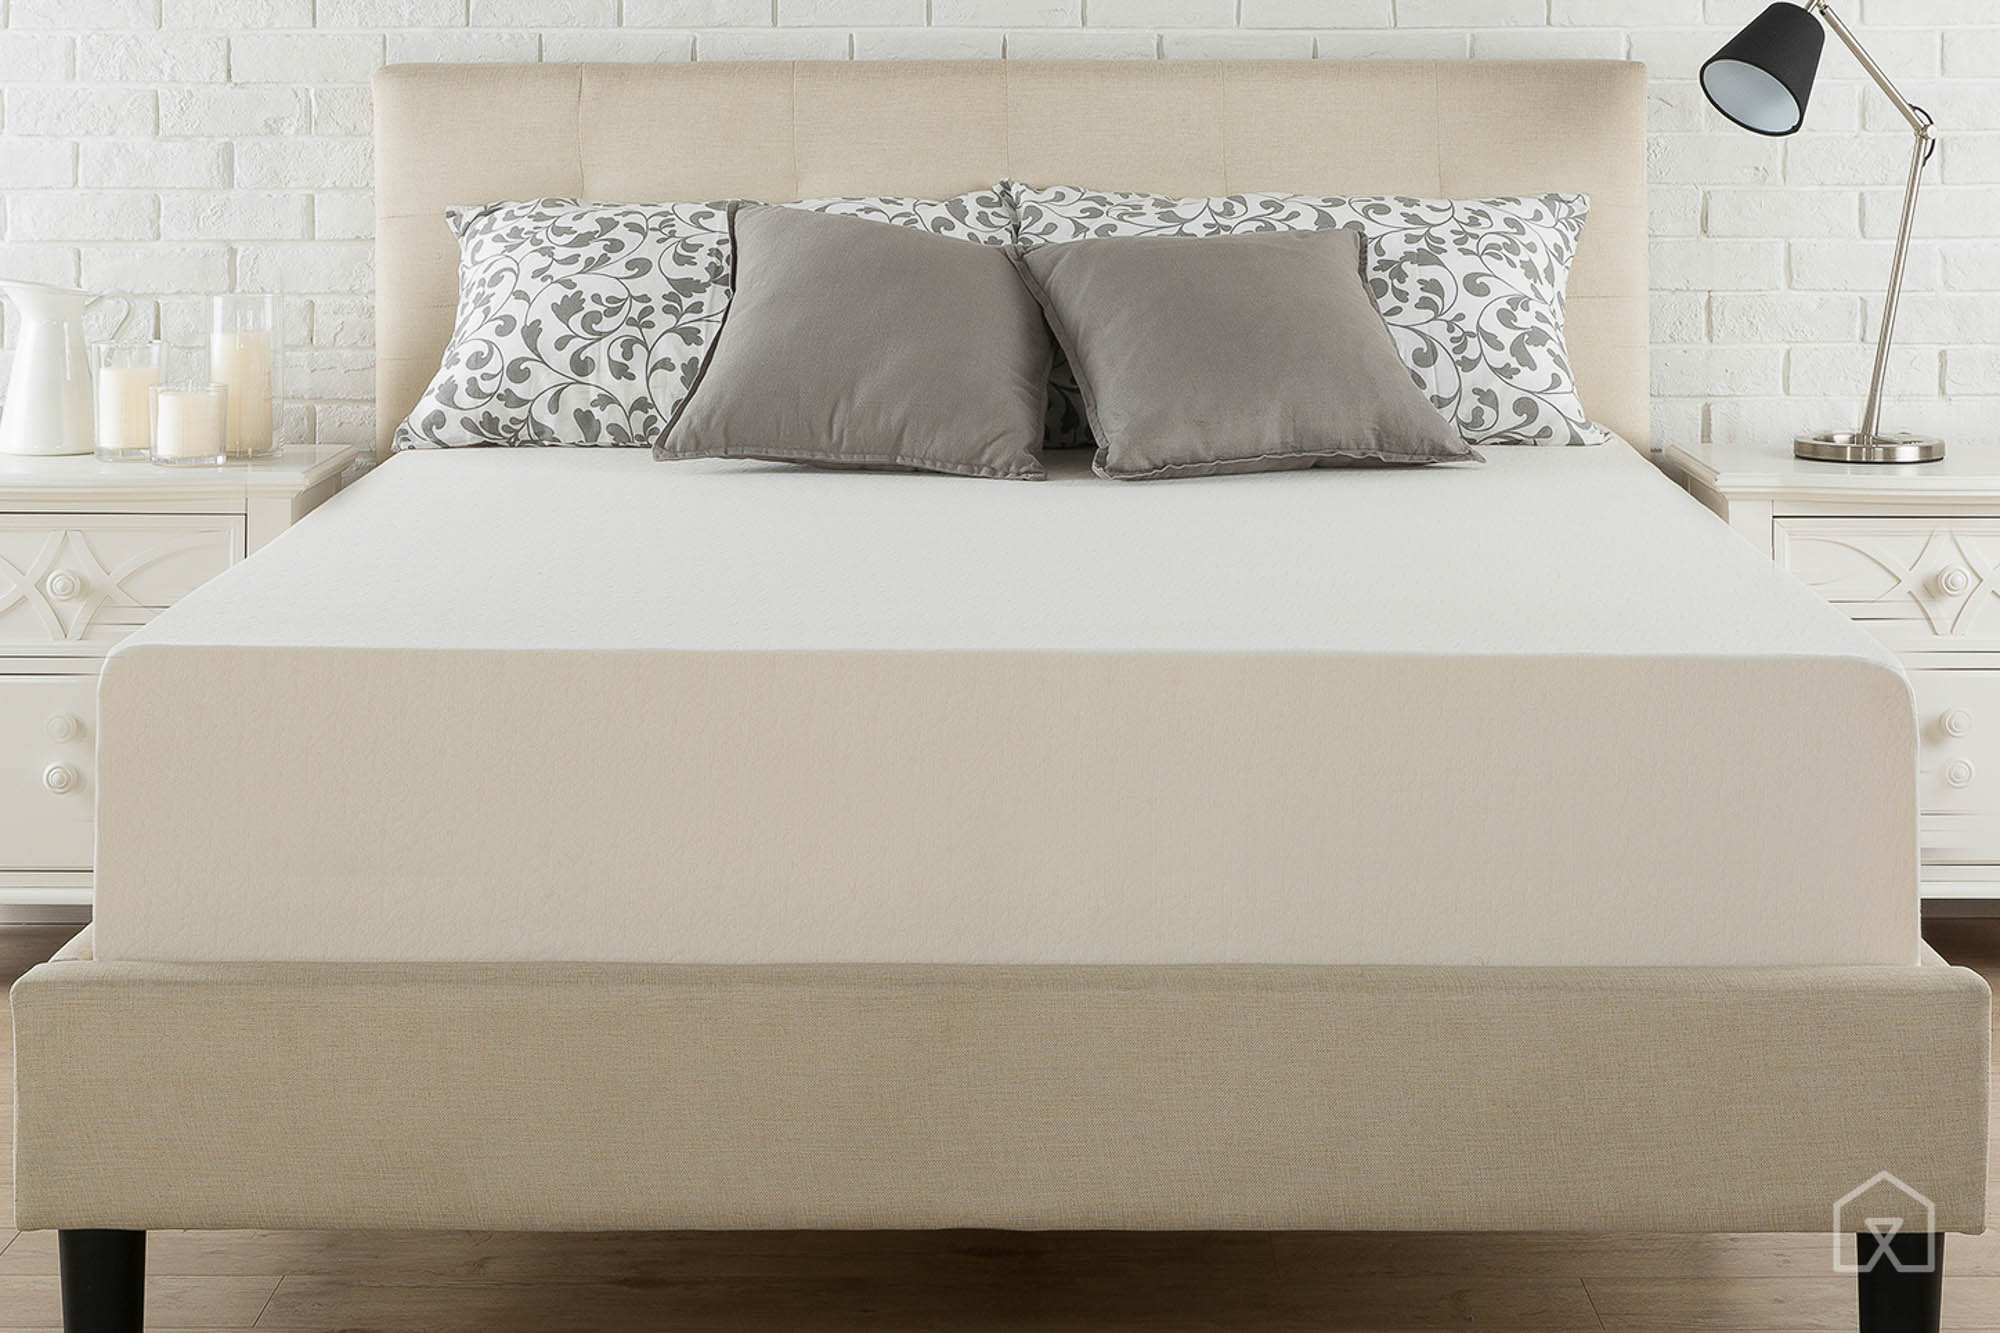 The best foam mattresses you can online